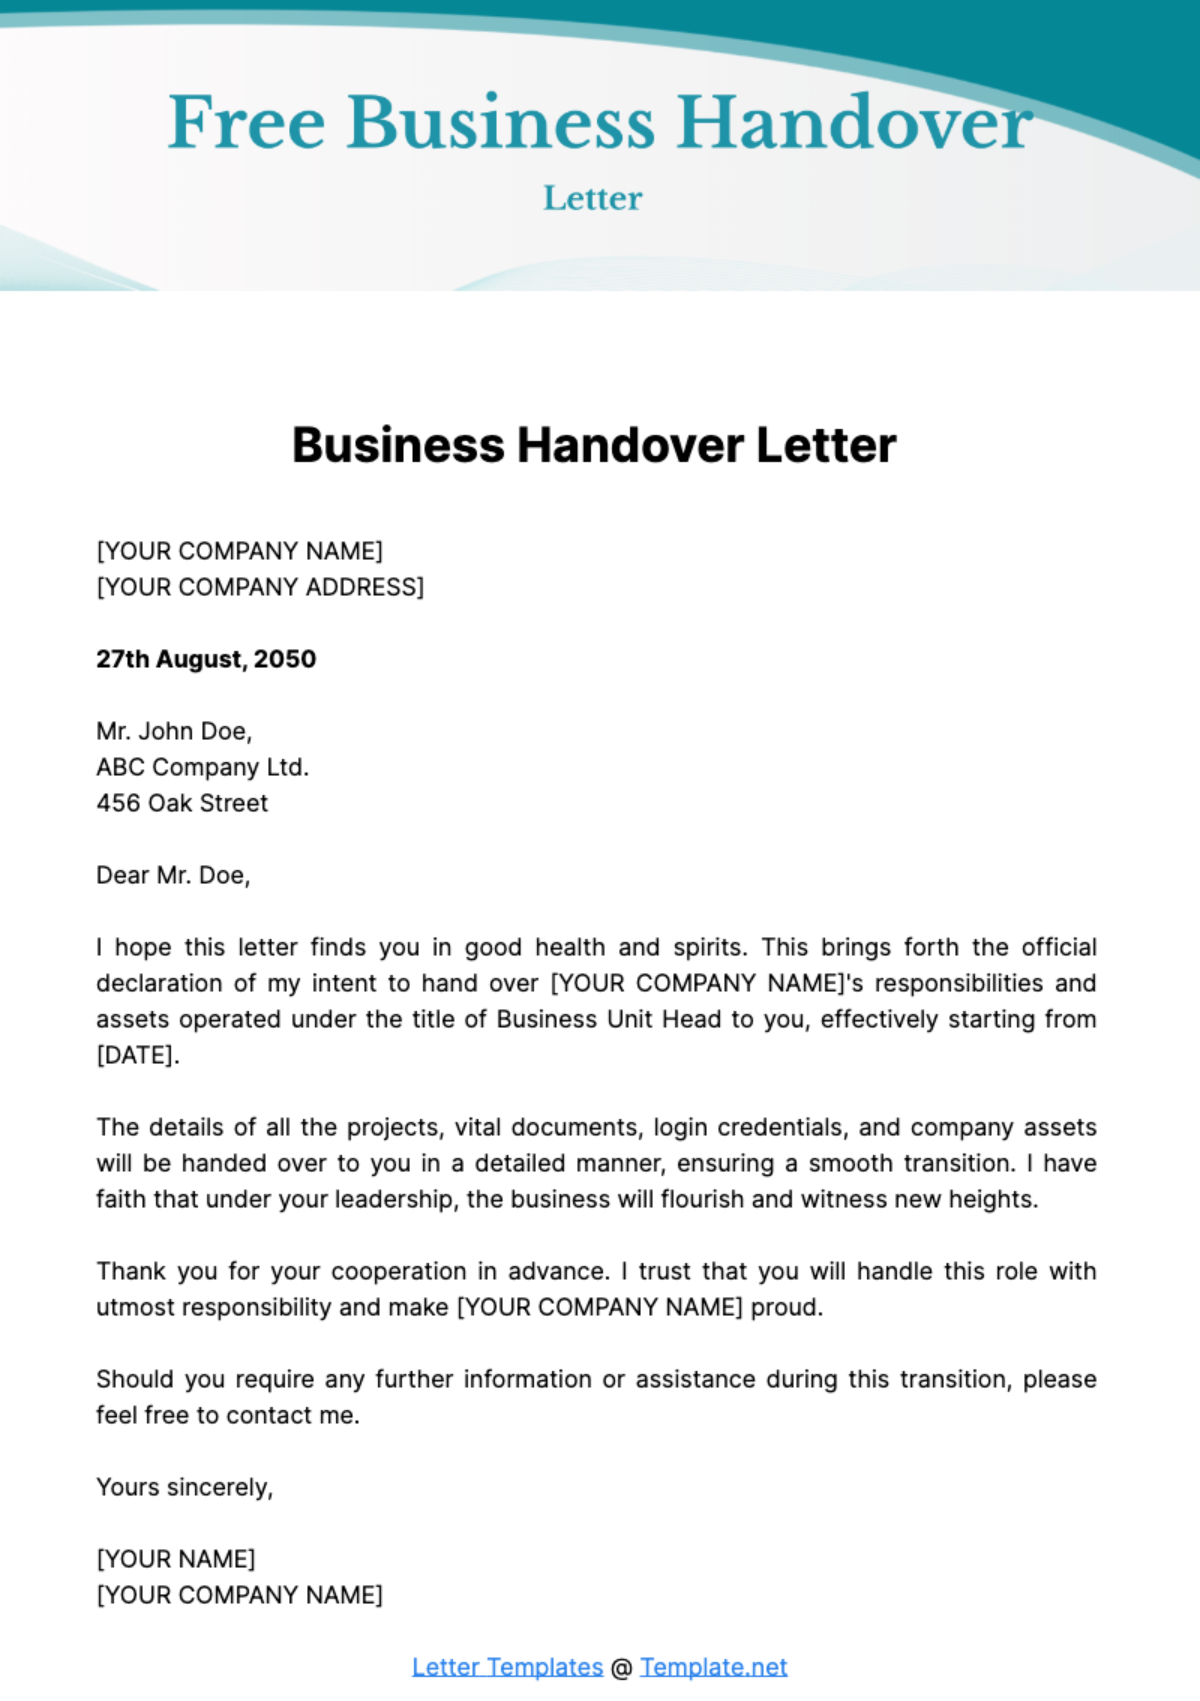 Business Handover Letter Template